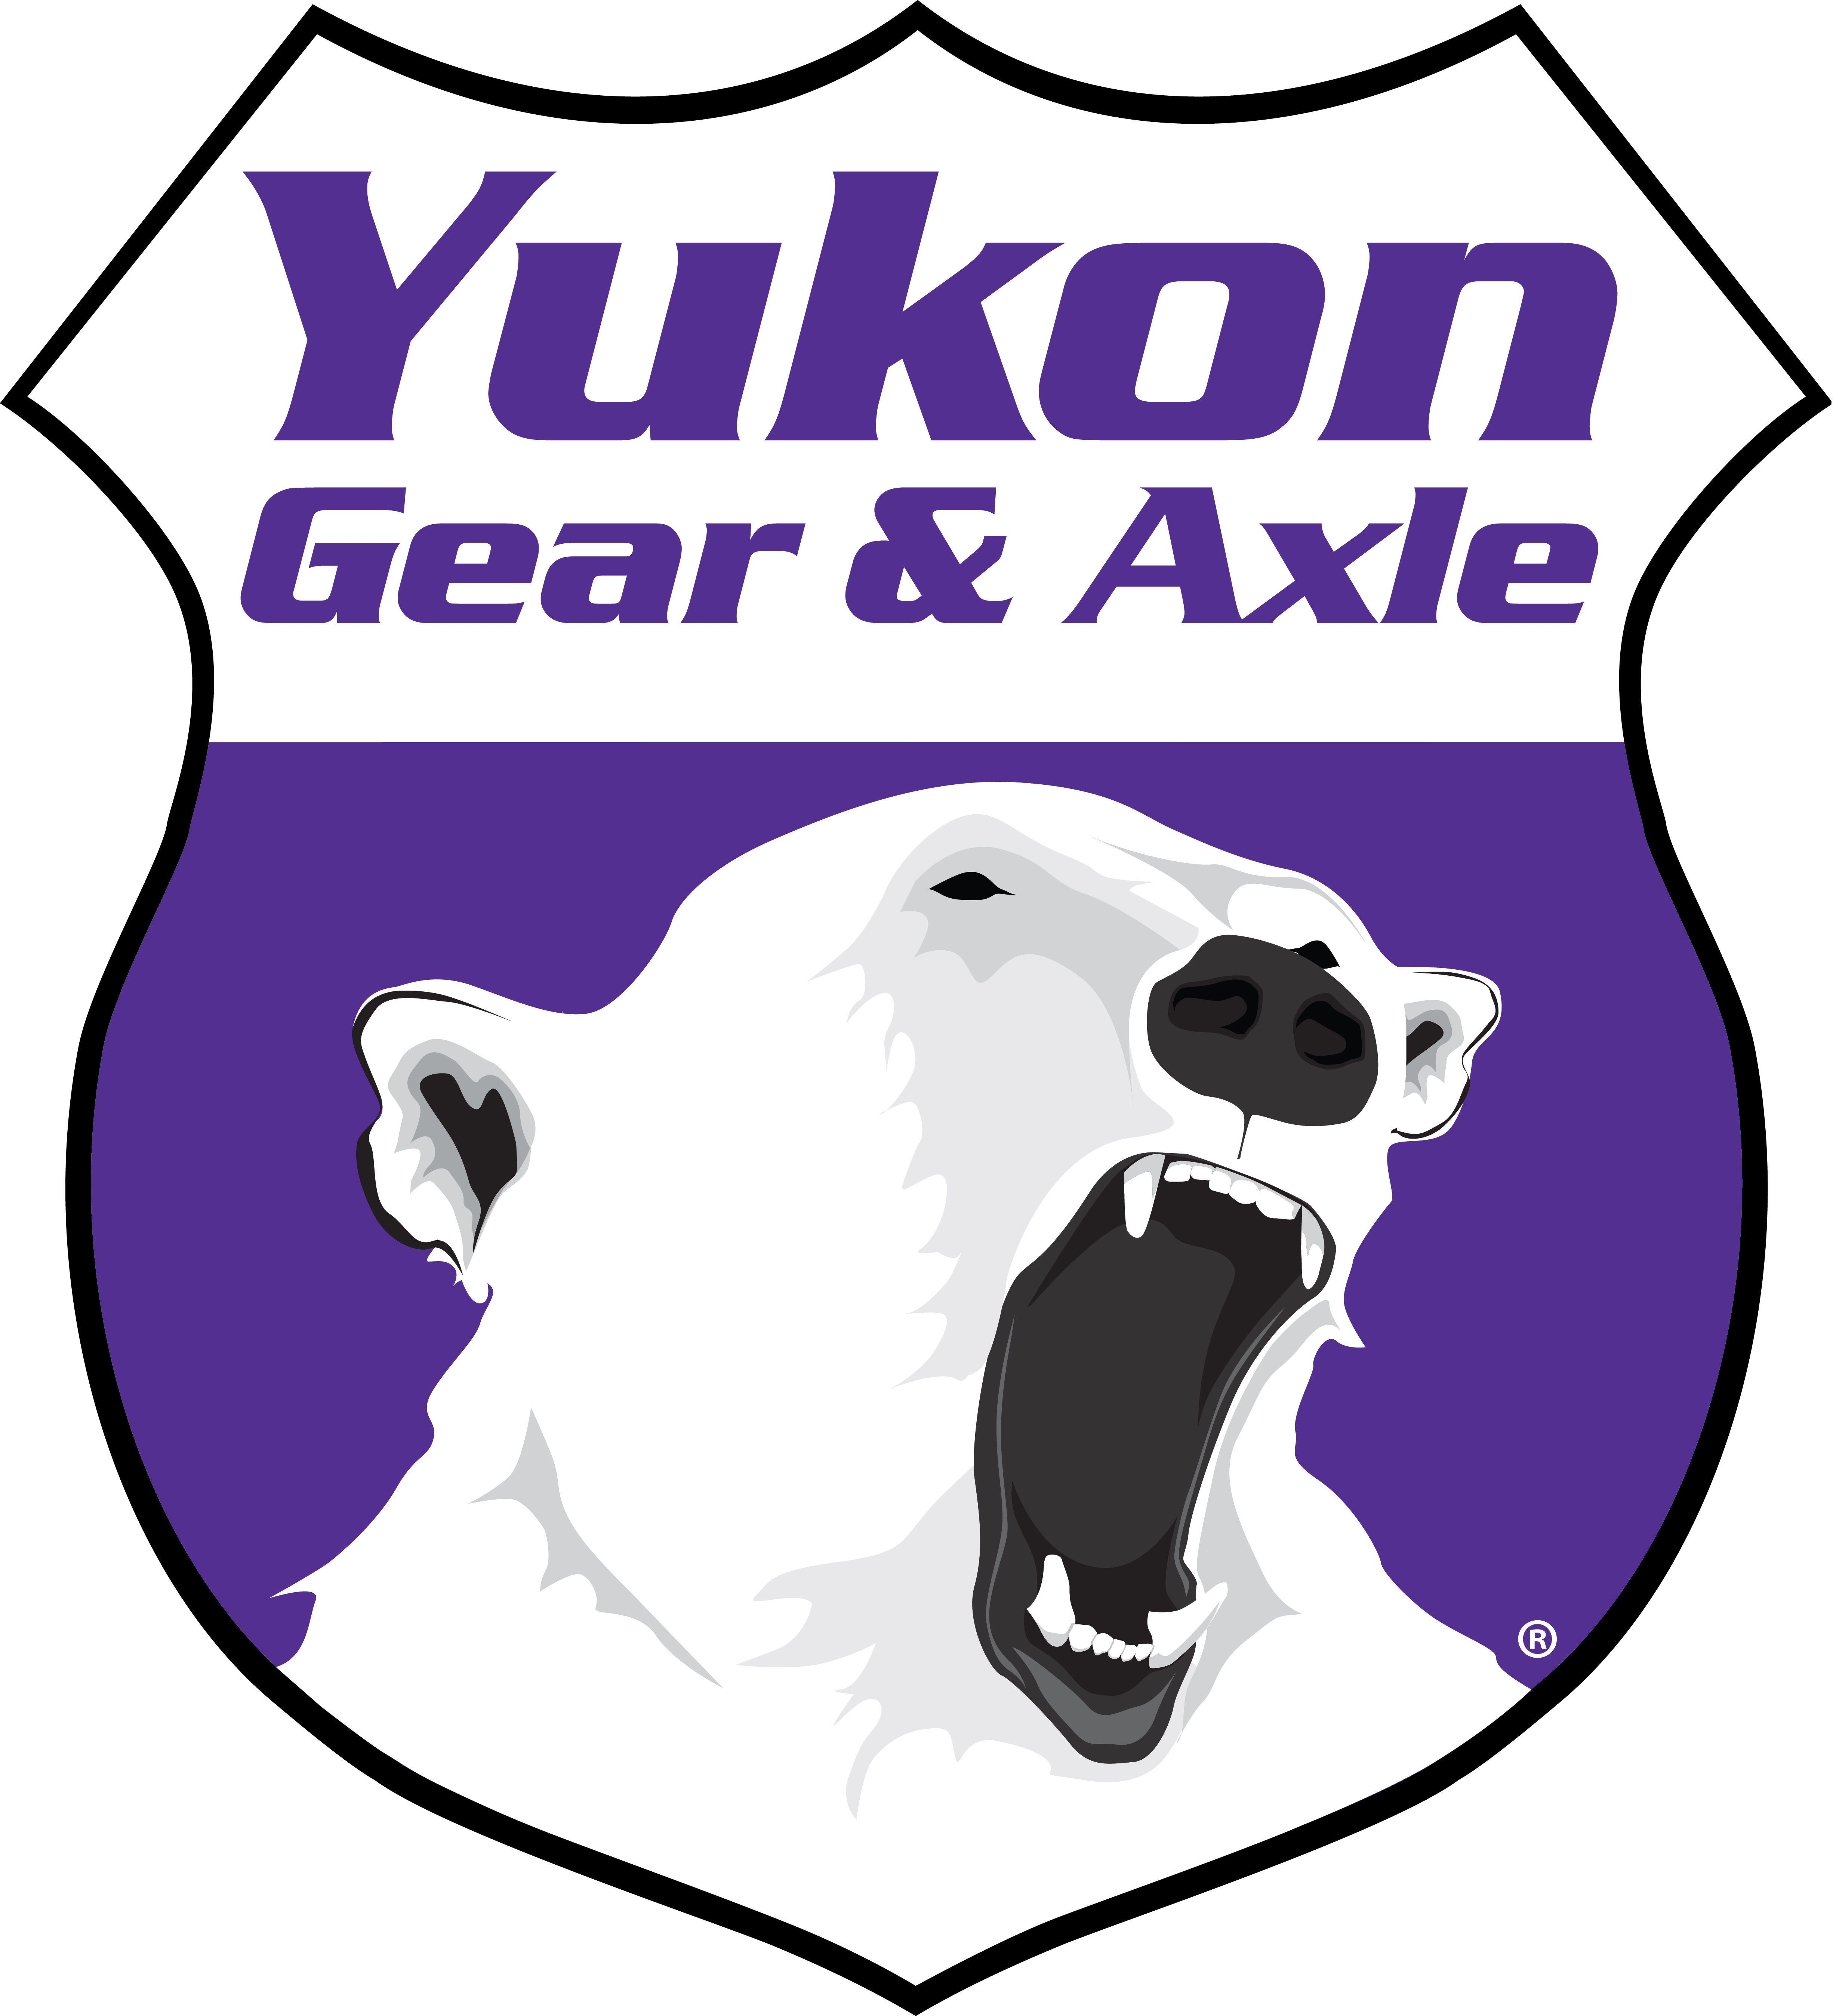 Yukon high performance replacement ring & pinion gear set, Dana 44, 3.73 ratio 